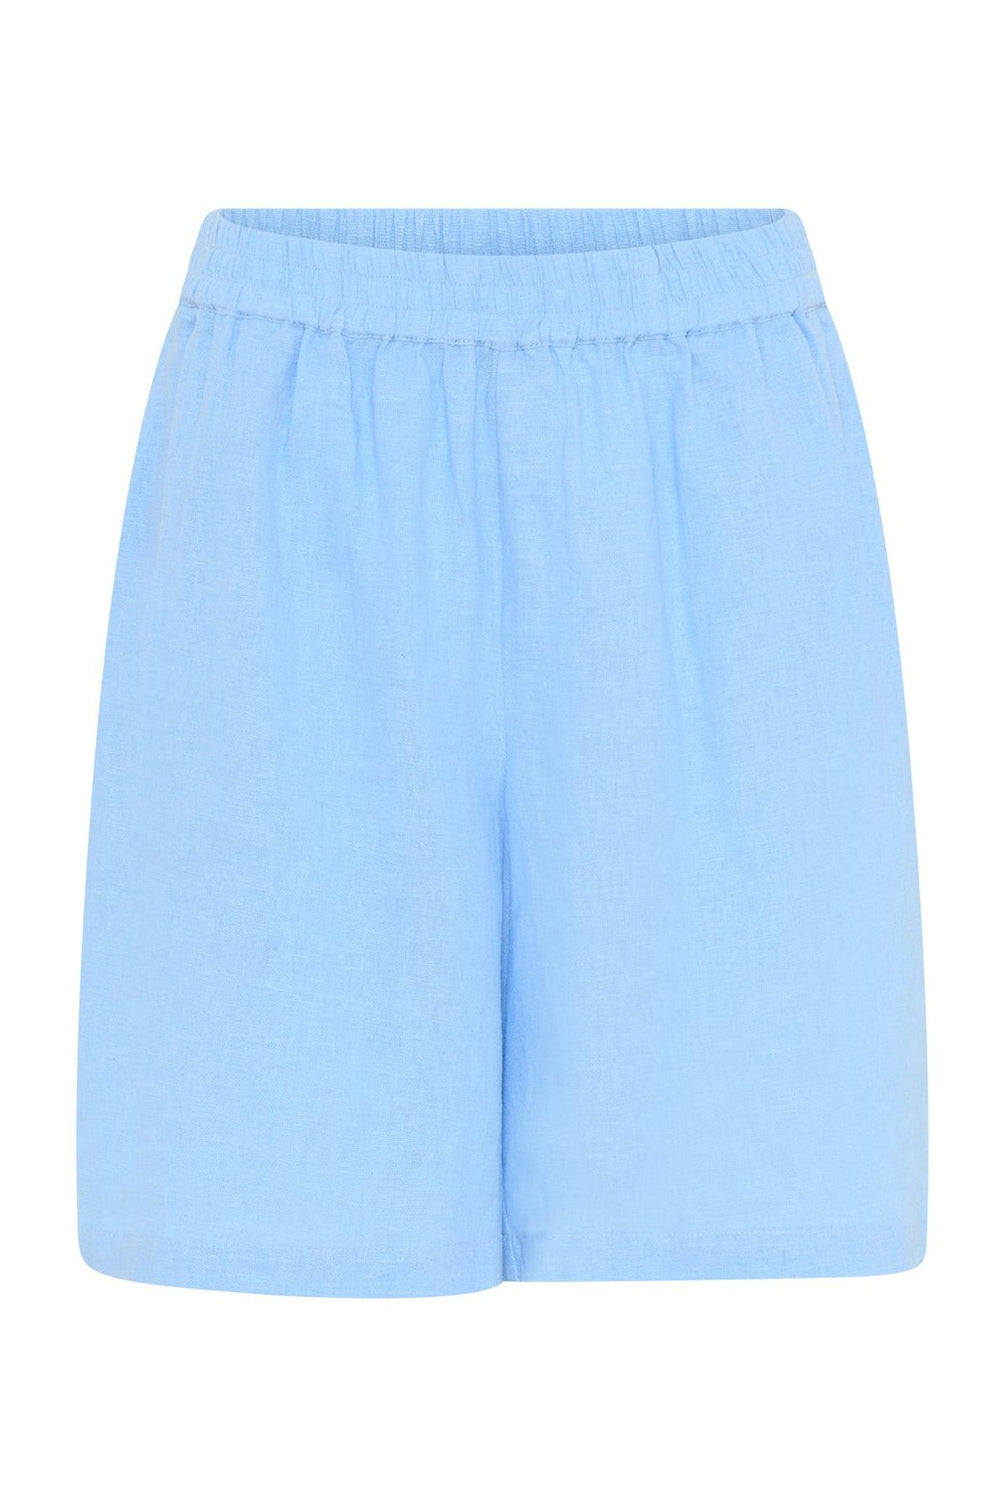 STØT MØDREHJÆLPEN: La Rouge Anna shorts, light blue